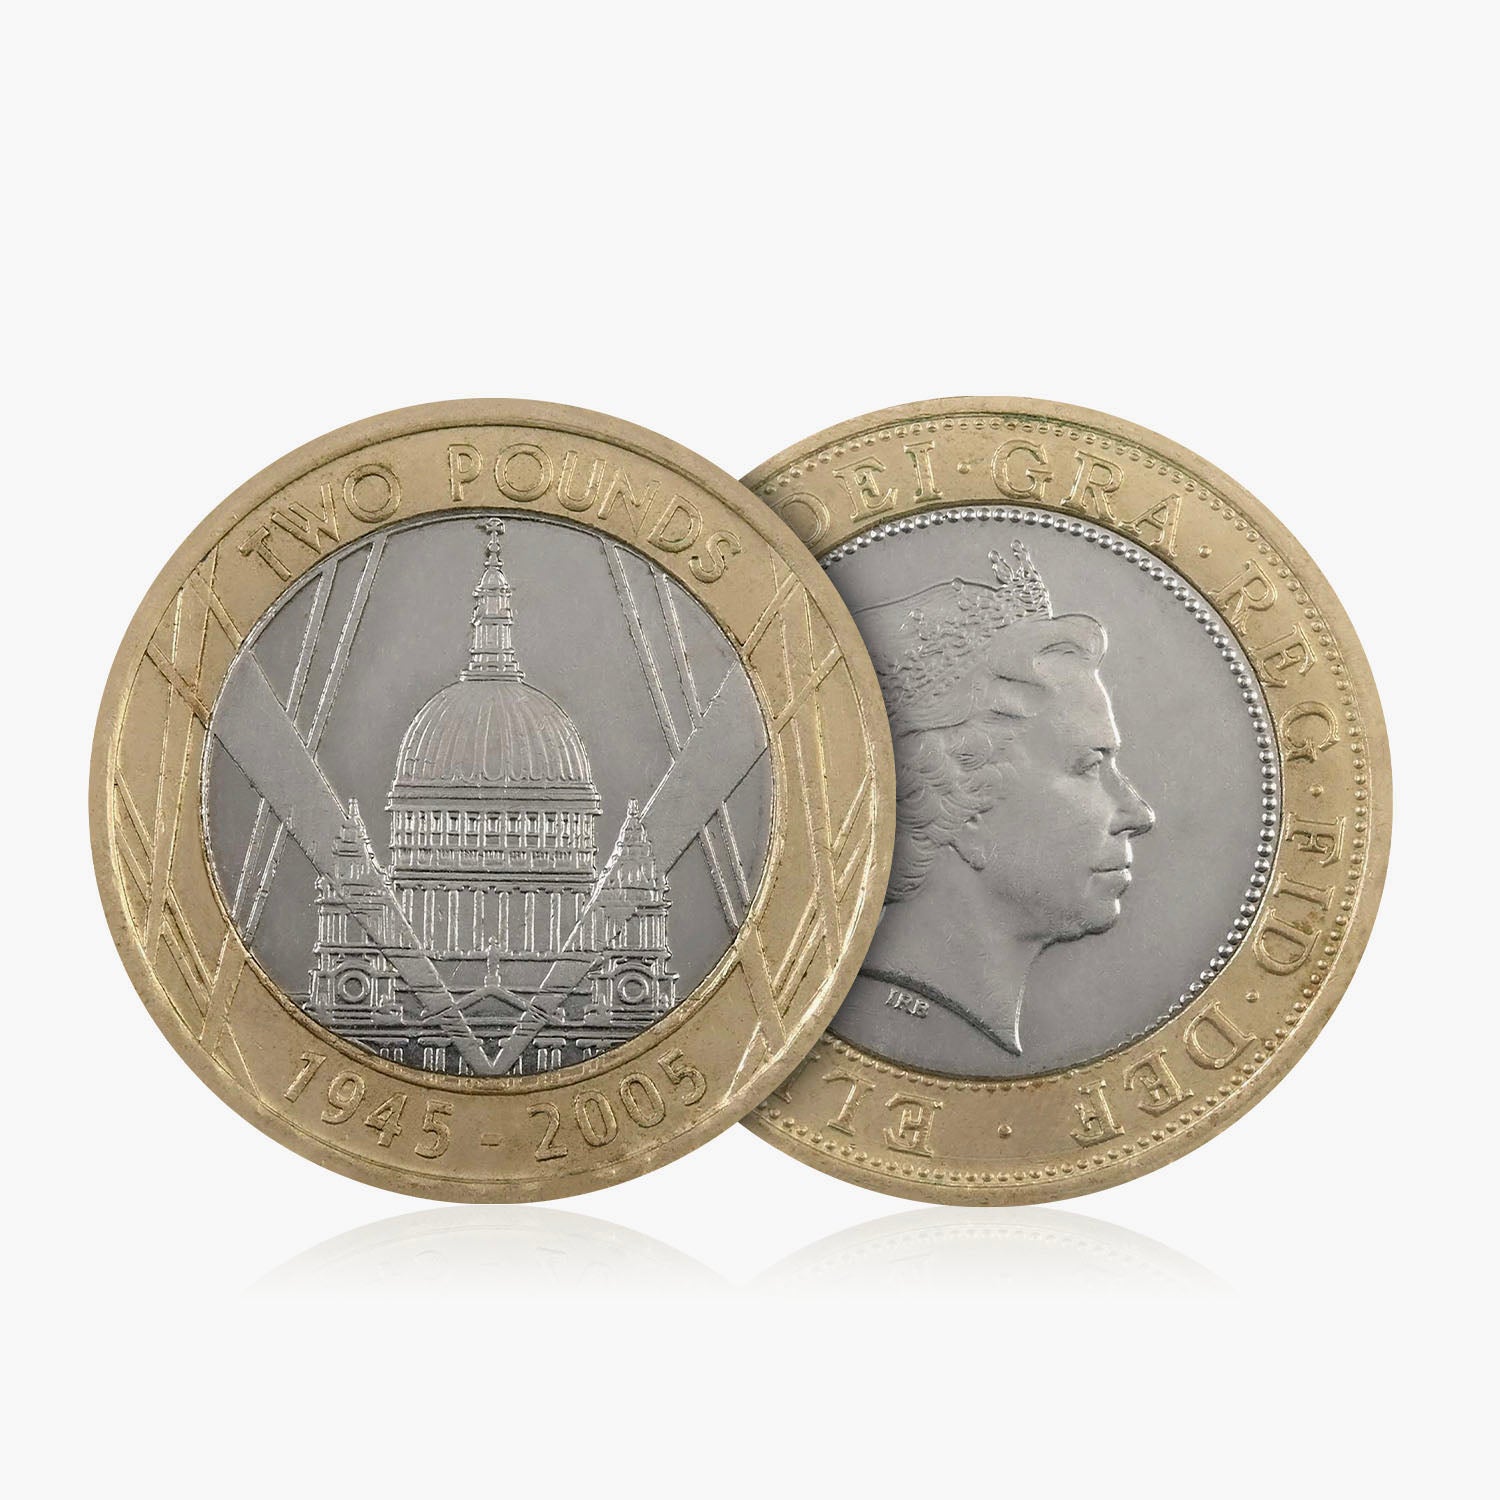 2005 Circulated End of World War II UK £2 Coin